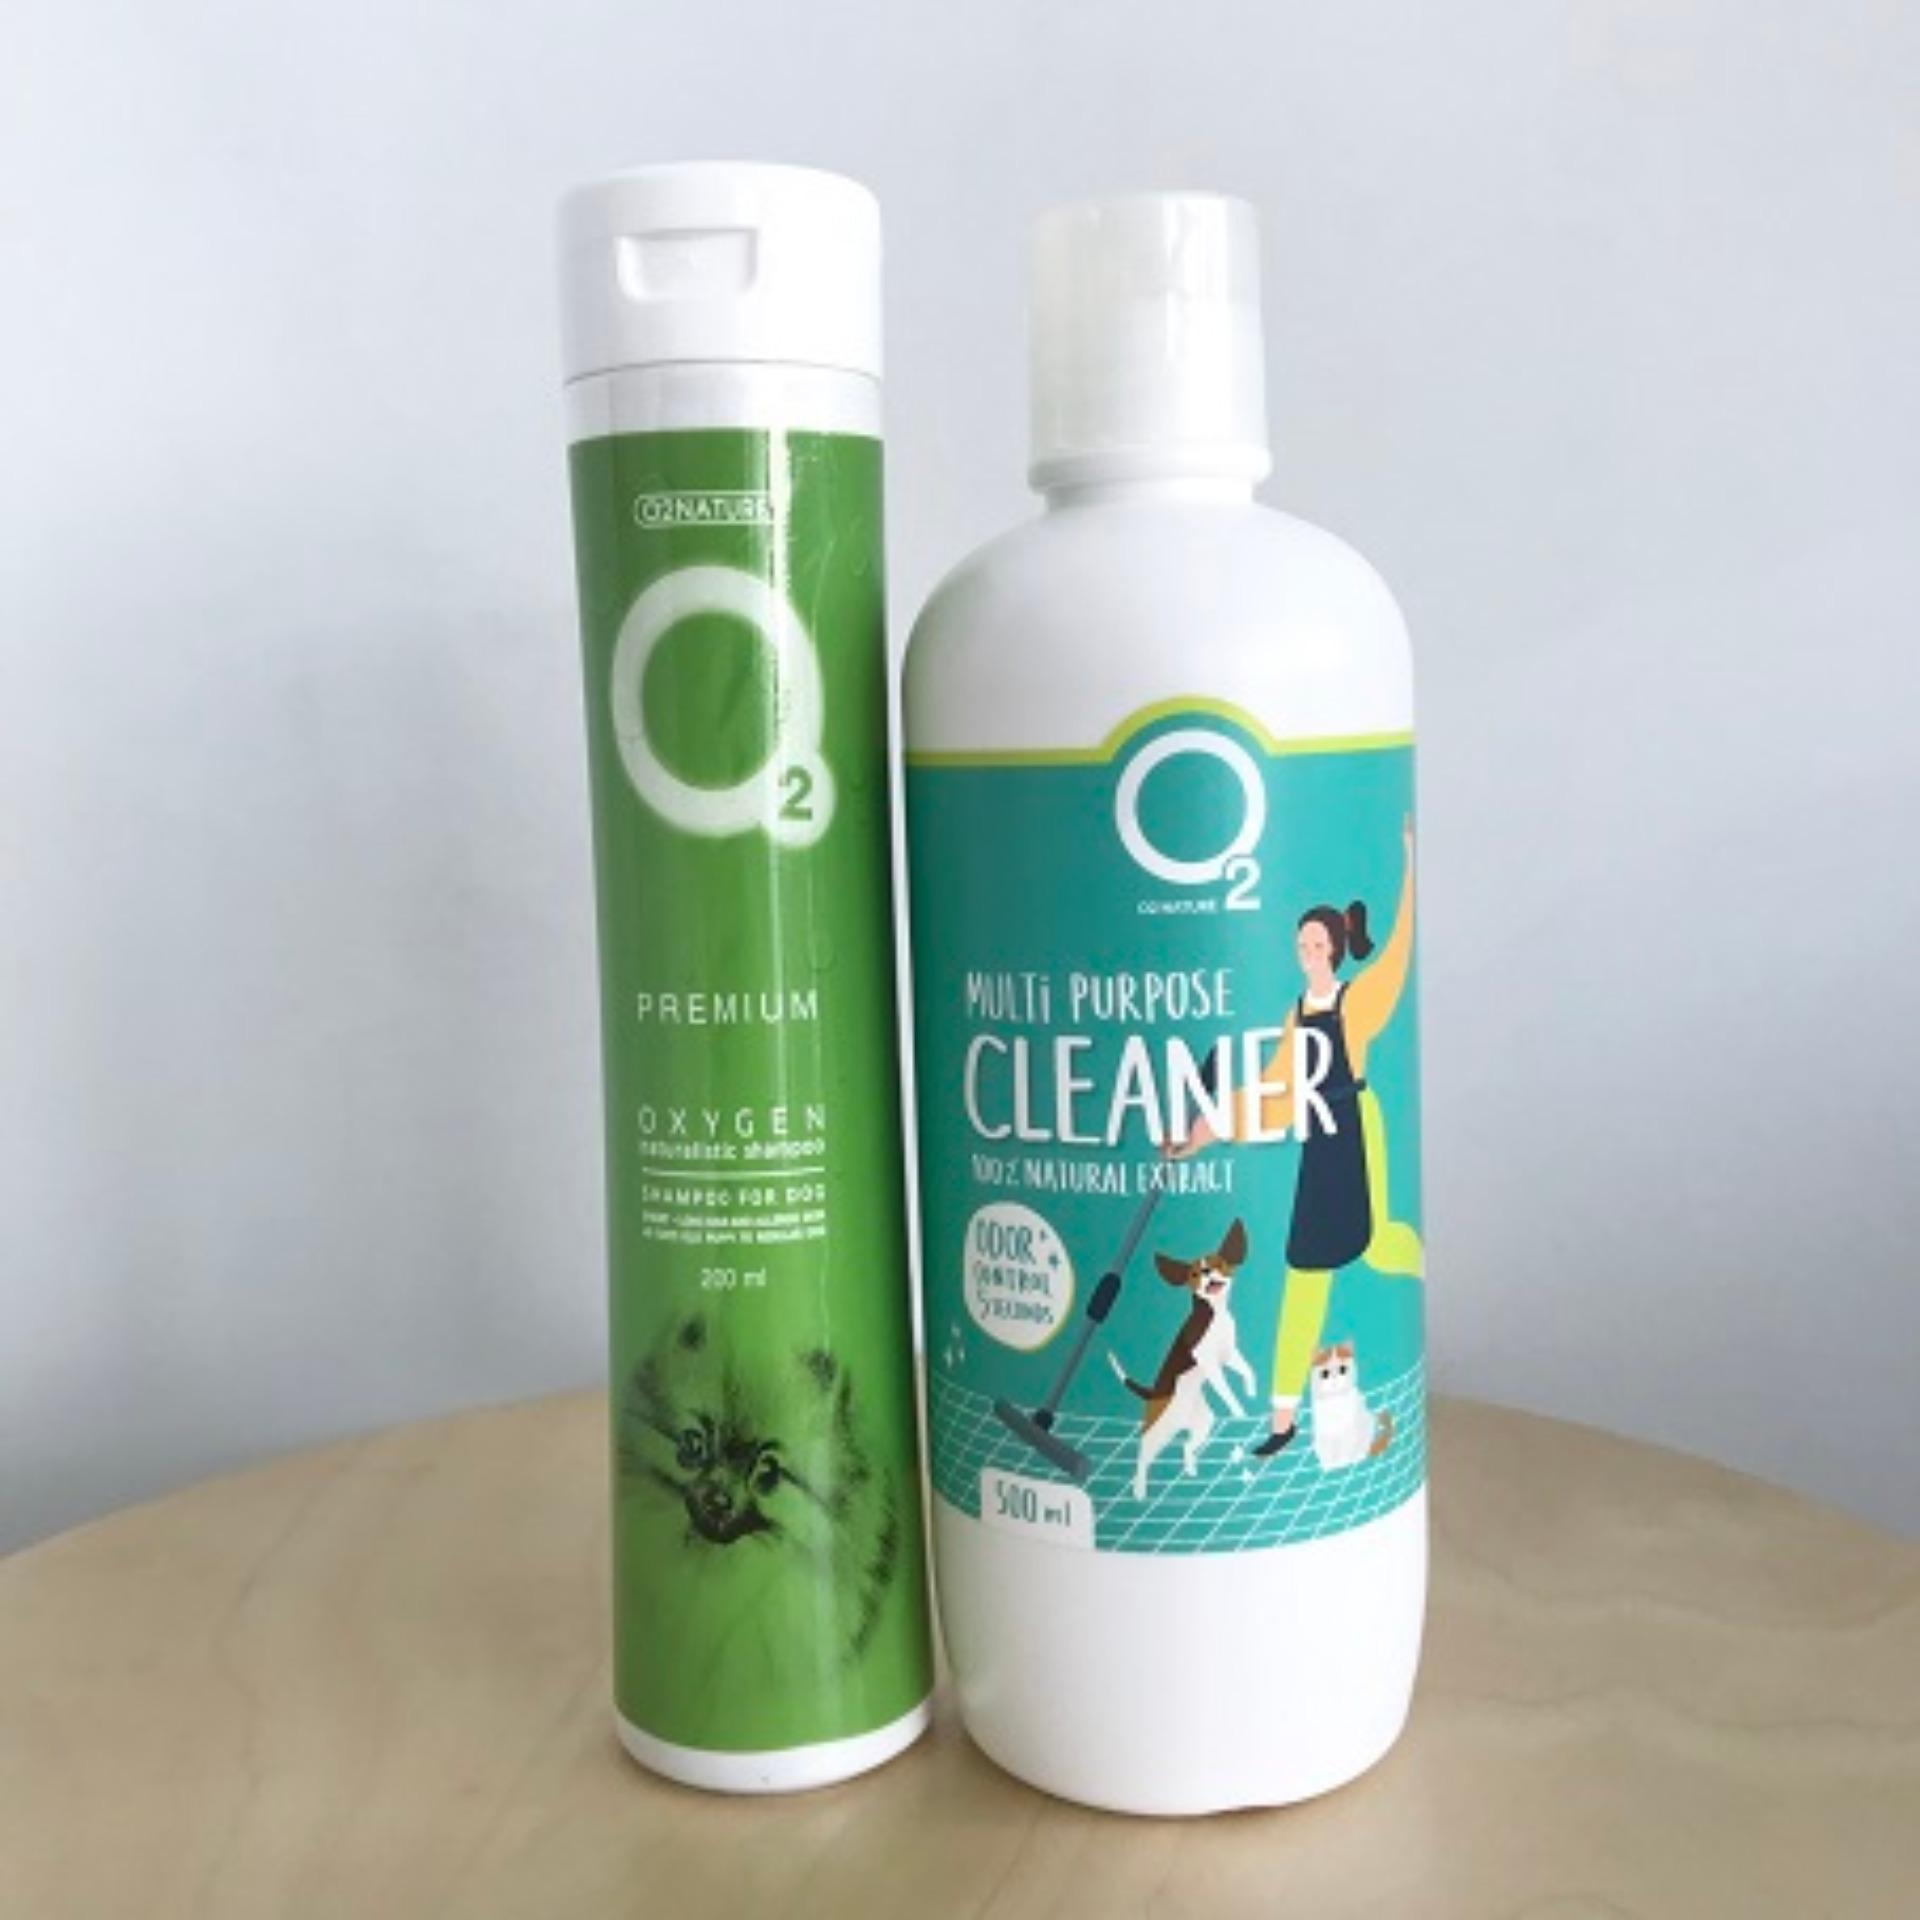 O2 Shampoo Premium-Green 200 ml & Cleaner 500 ml แชมพูโอทู สำหรับสุนัขขนยาว และน้ำยาอเนกประสงค์ สกัด